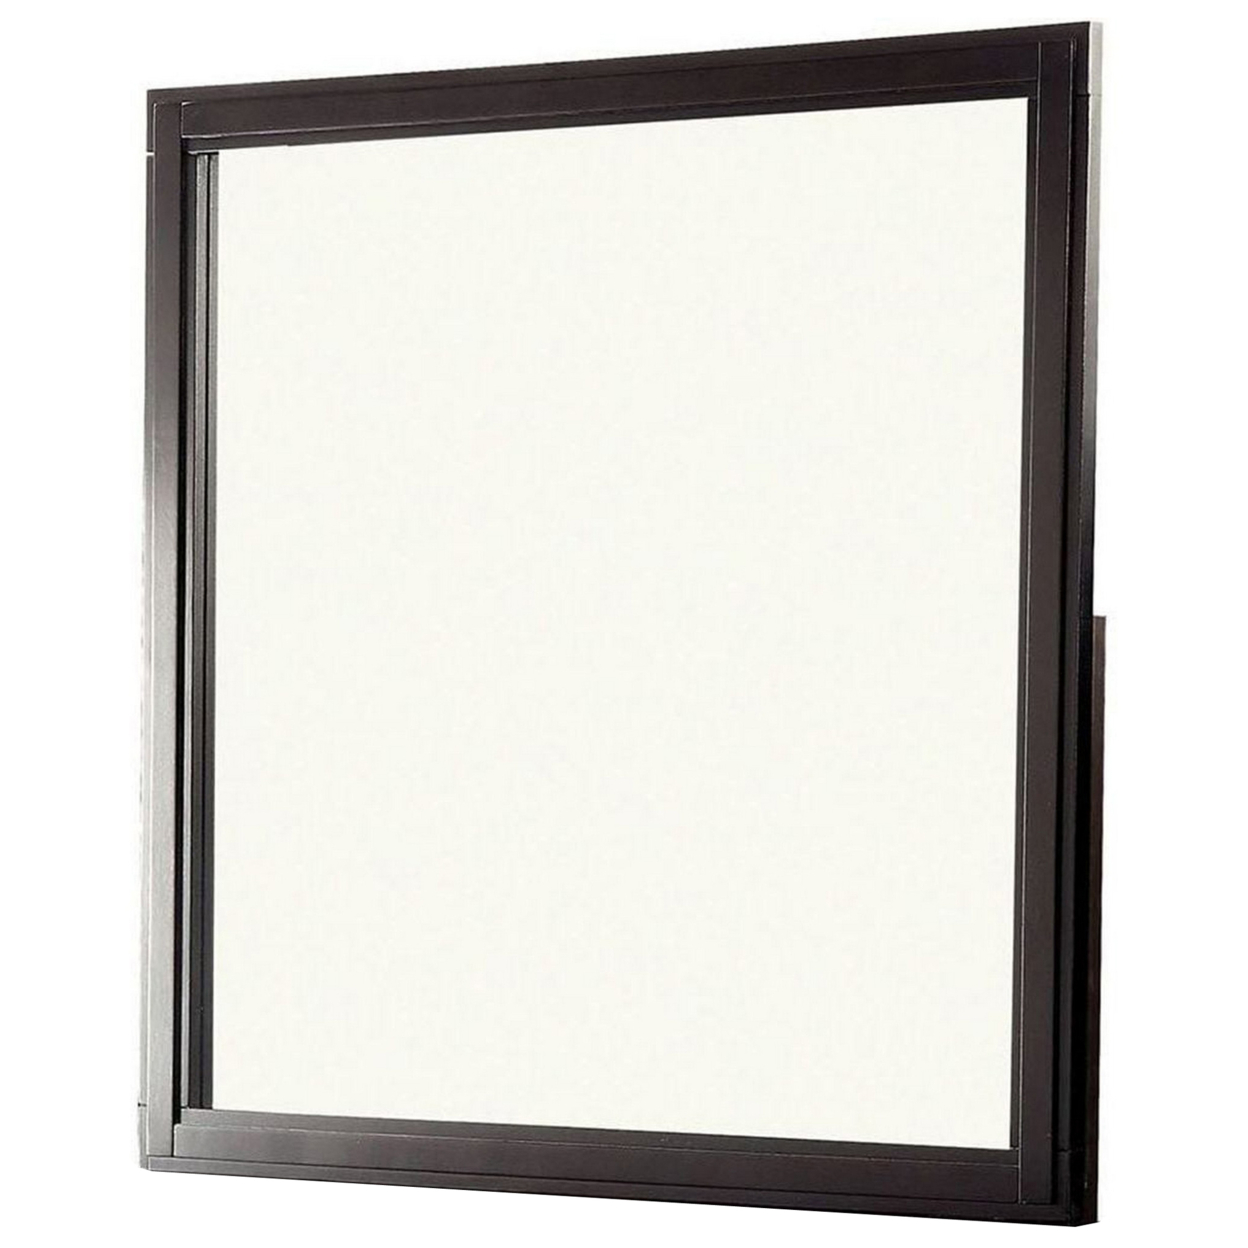 38 Transitional Style Square Wooden Frame Mirror, Espresso- Saltoro Sherpi